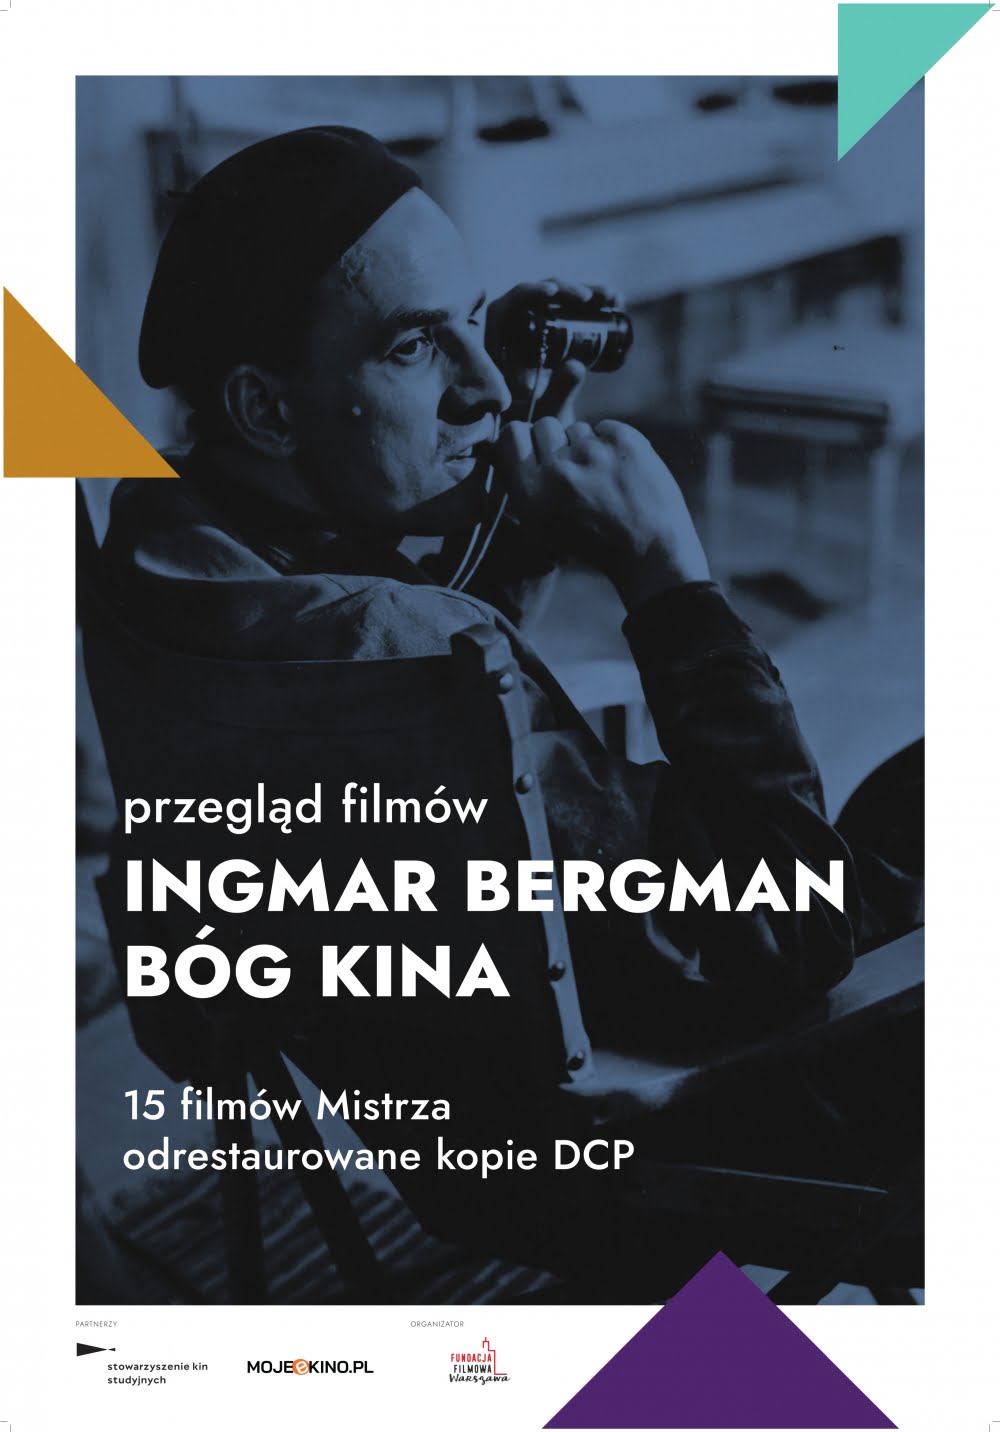 Ingmar Bergman: Namiętności (480321)